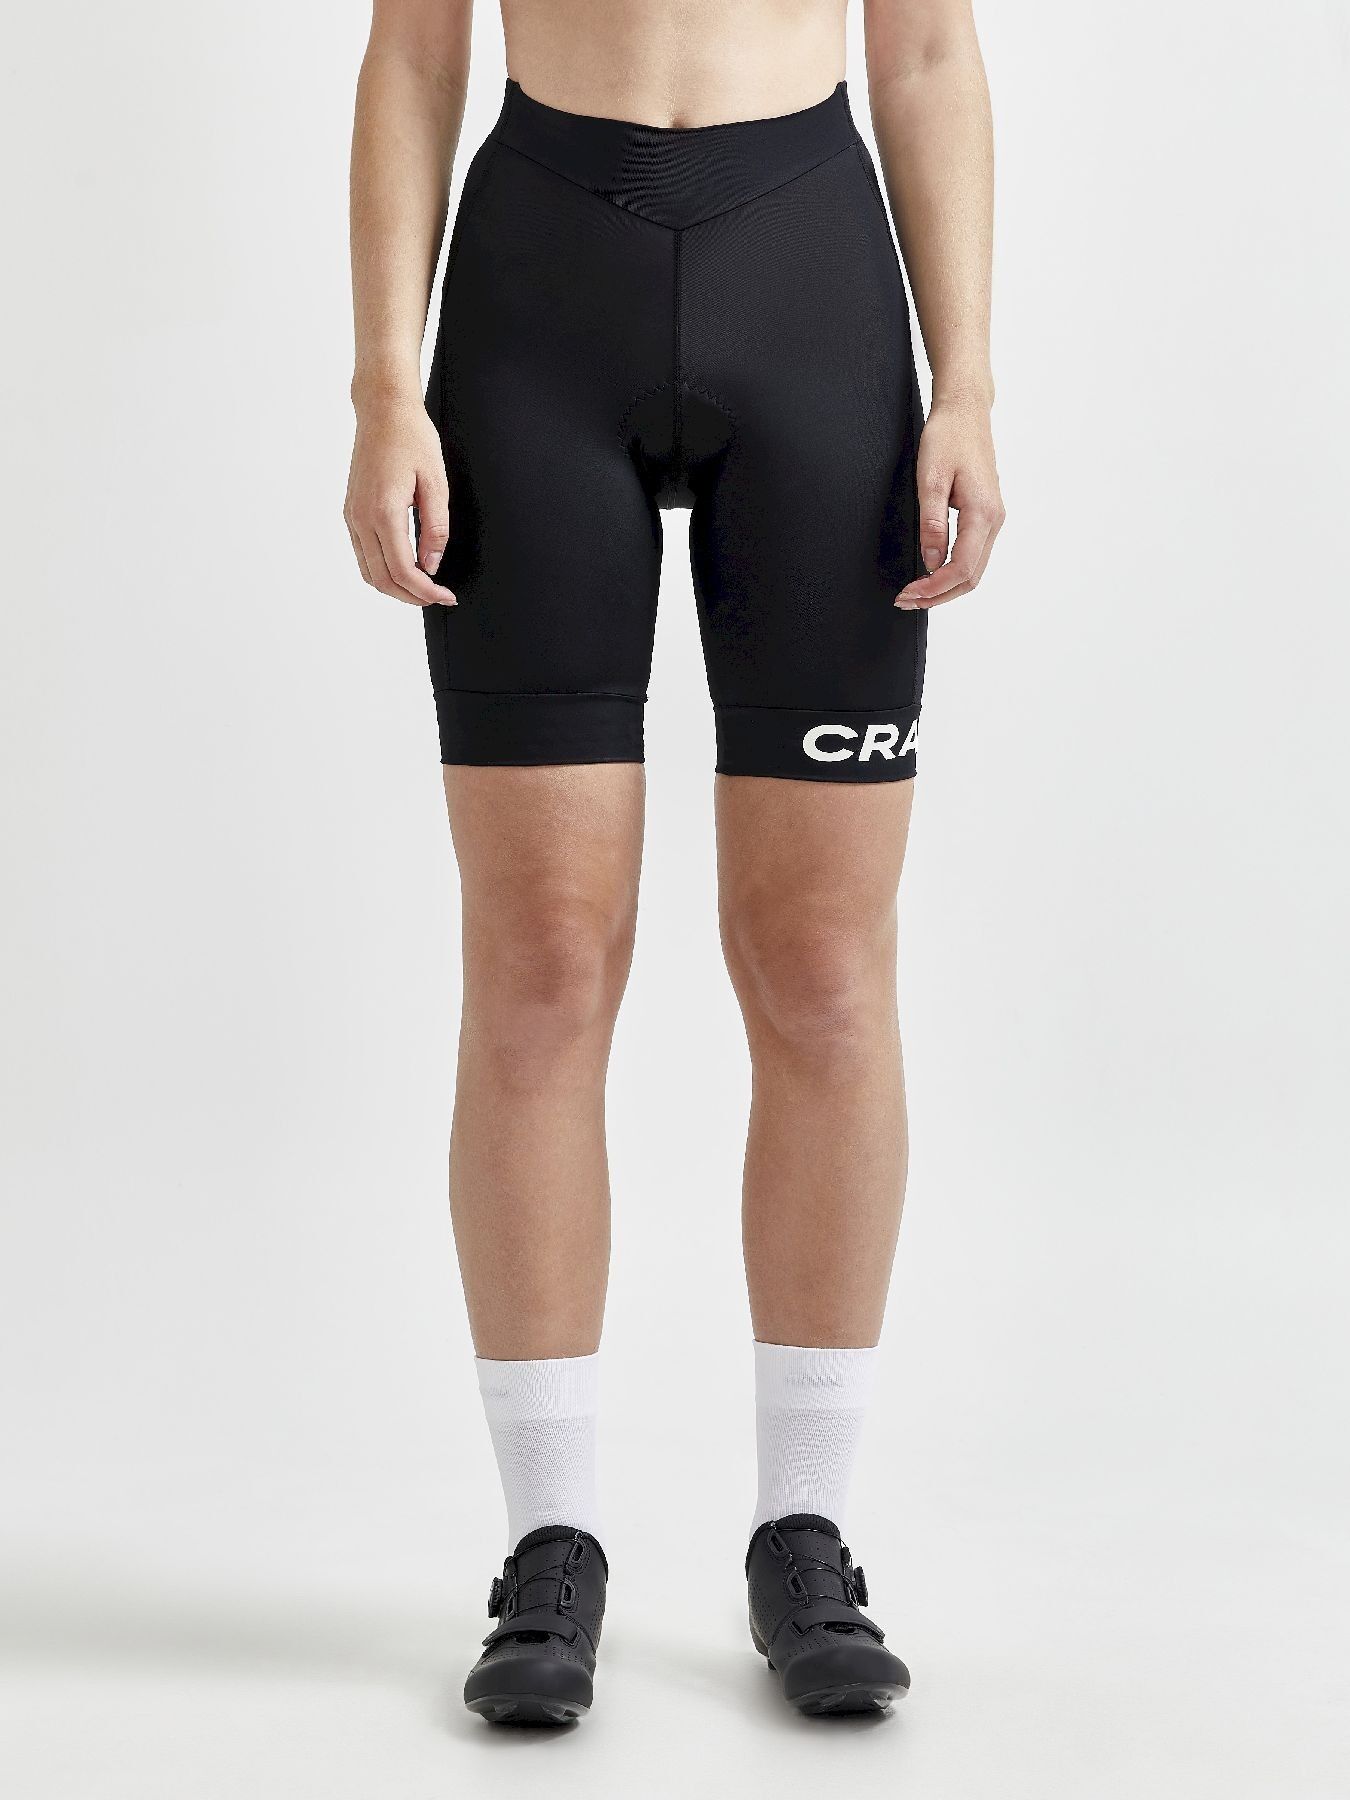 eksil jage underkjole Craft Core Endurance Shorts - Cykelbukser Damer